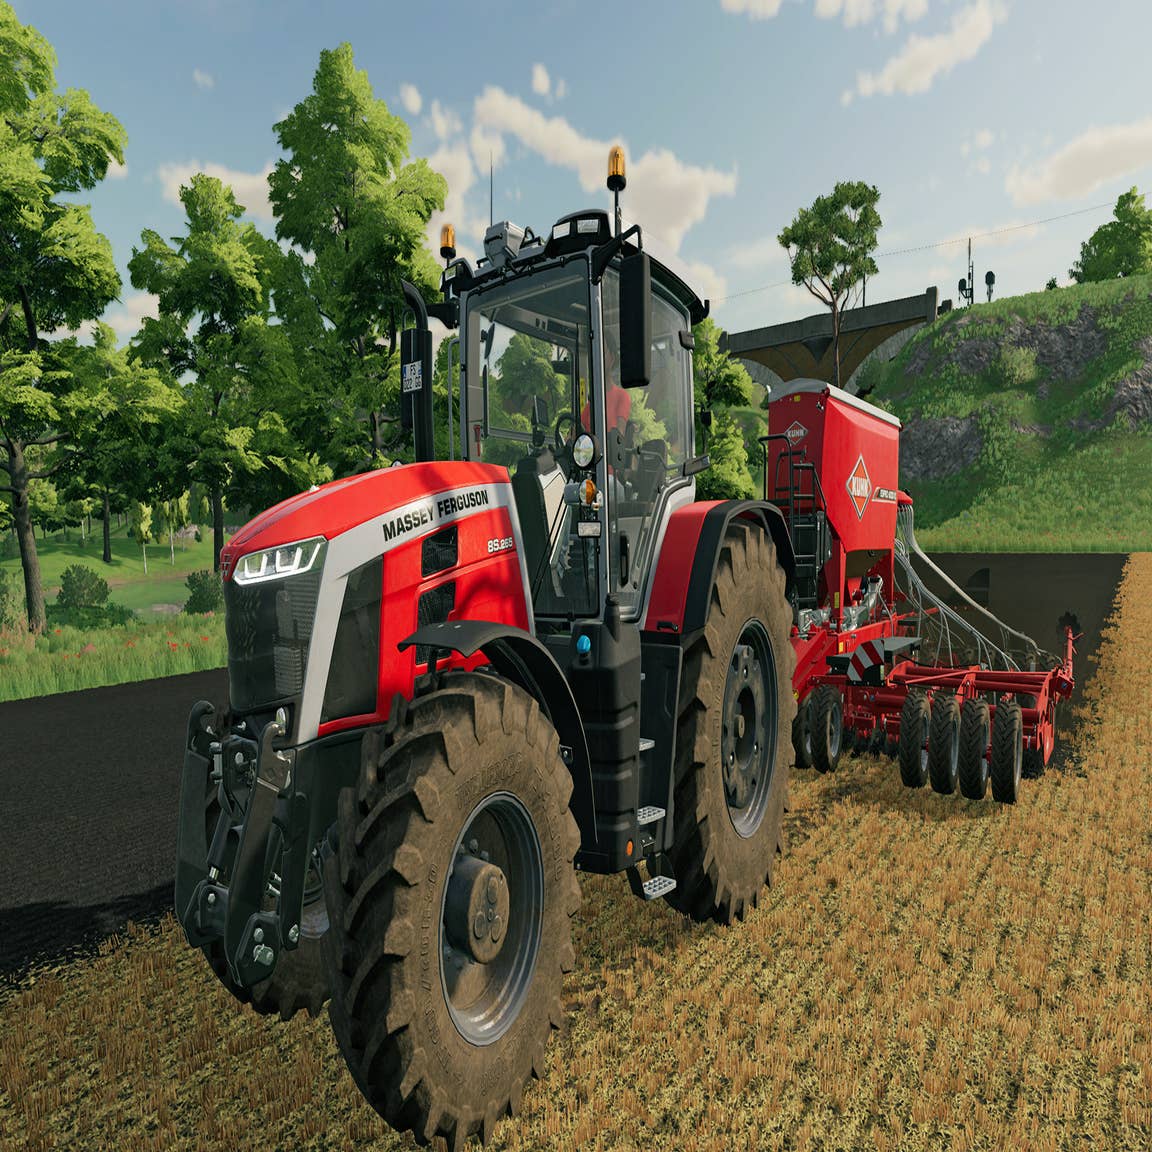 Farming Simulator 22 [ Launch Bonus Edition ] (PS5) NEW